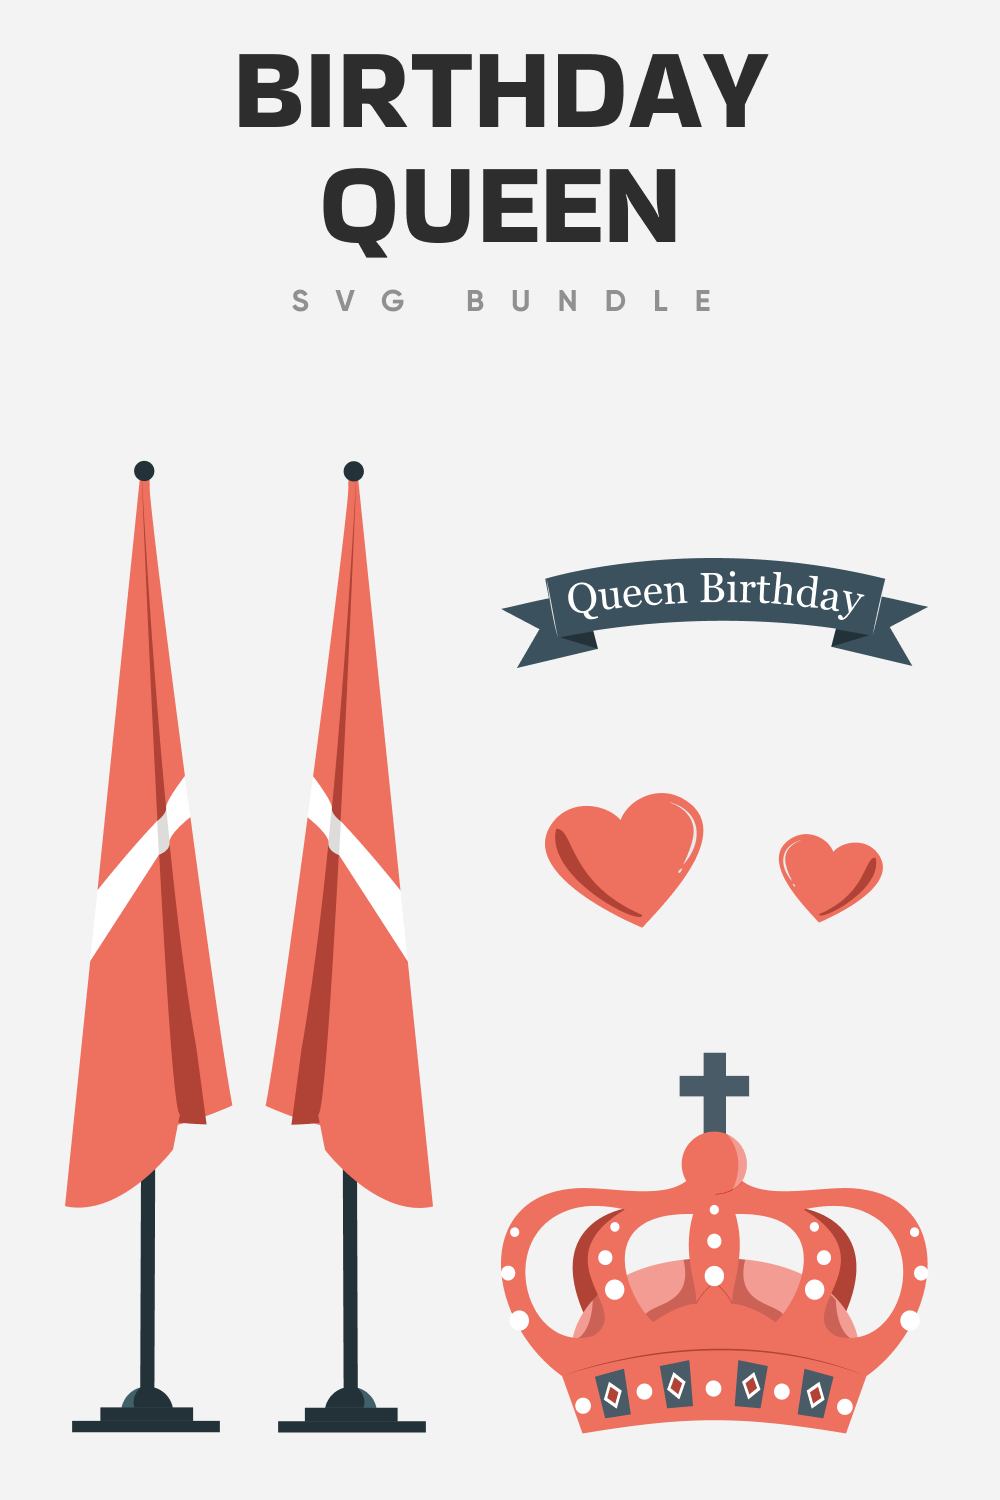 Birthday queen SVG.